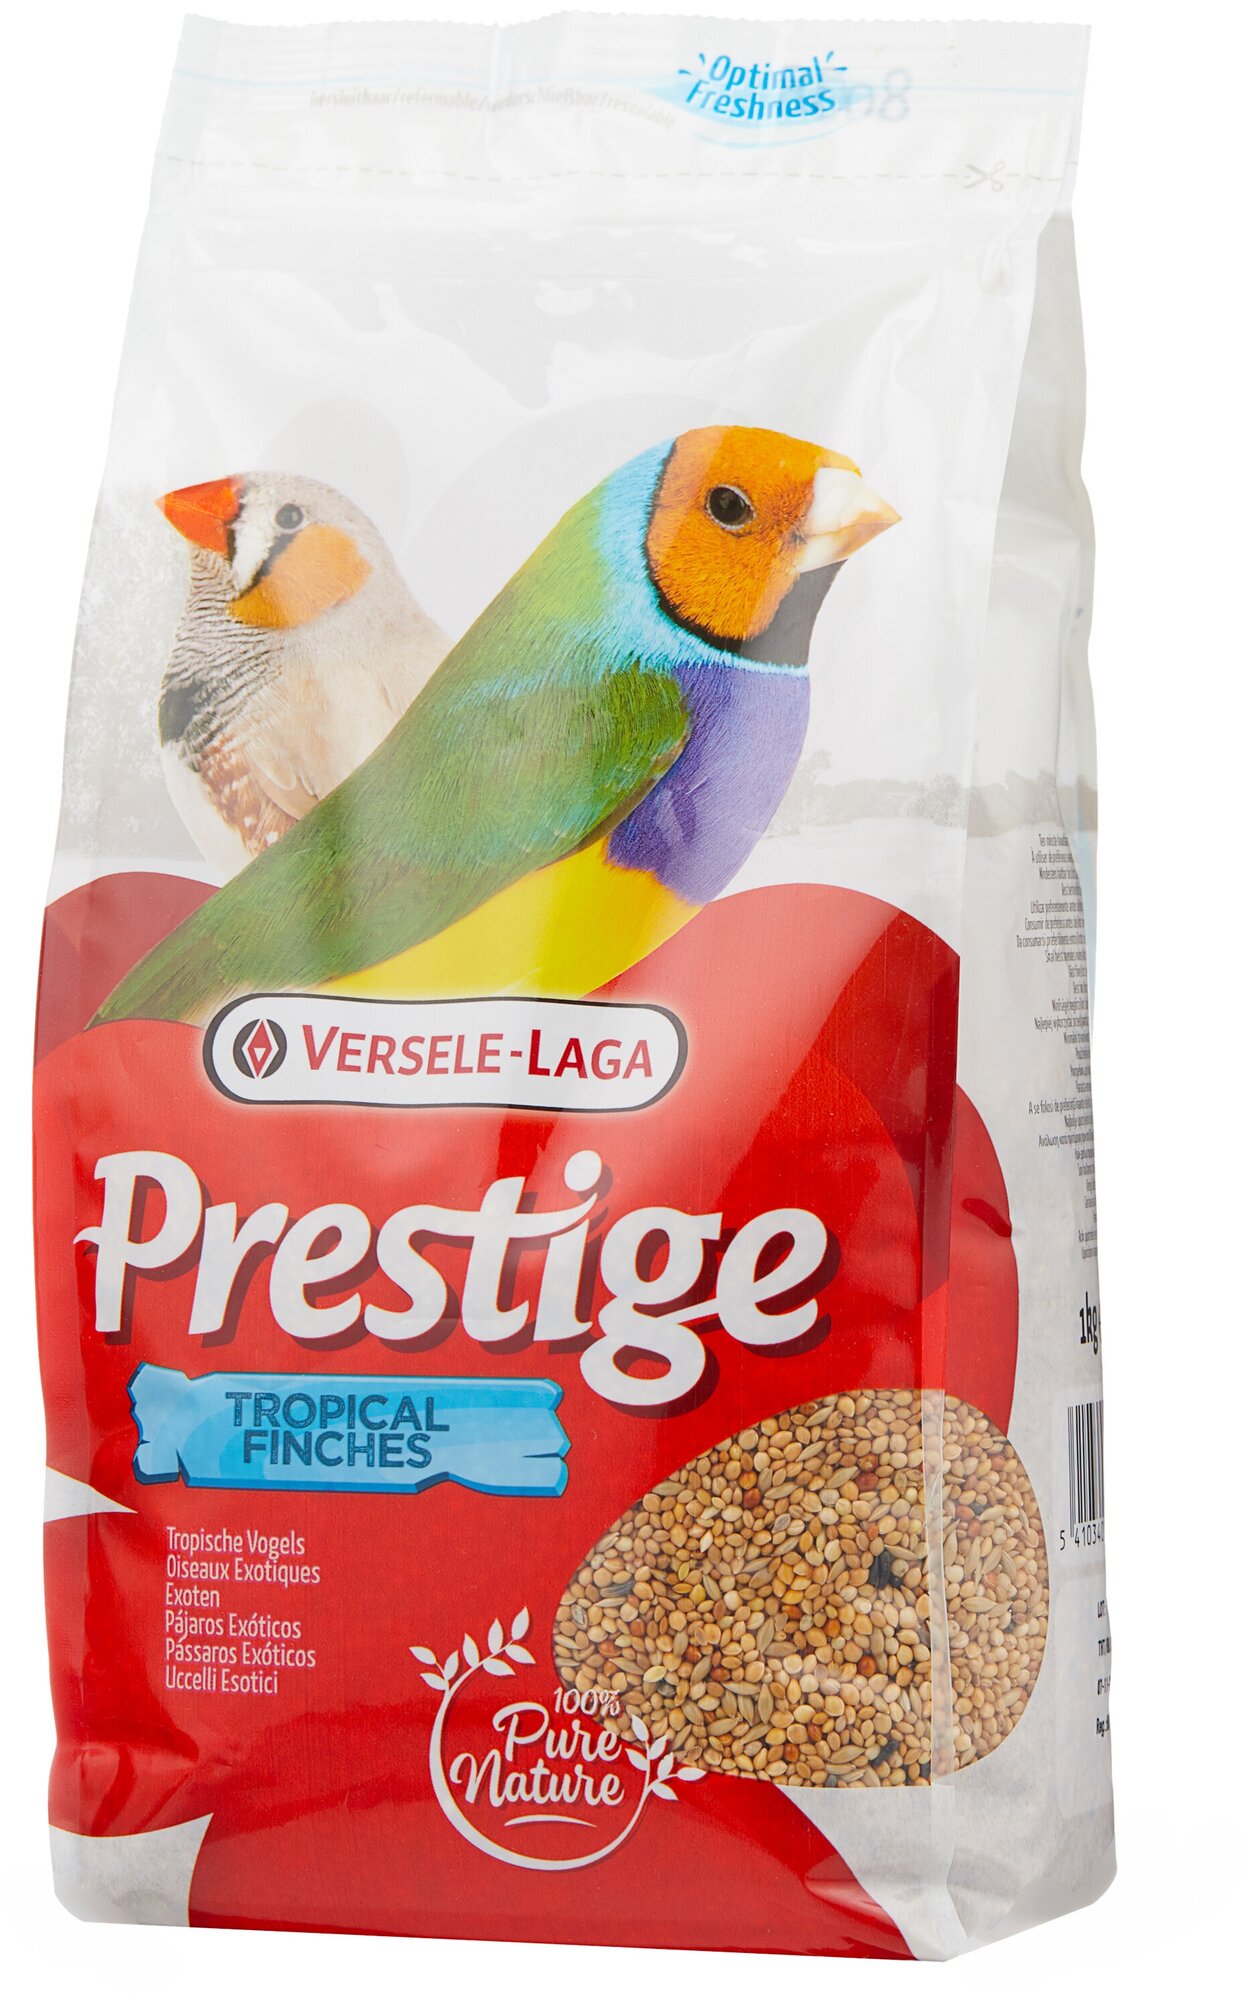 Versele-Laga корм Prestige Tropical Finches для экзотических птиц, 1кг —  купить в интернет-магазине по низкой цене на Яндекс Маркете